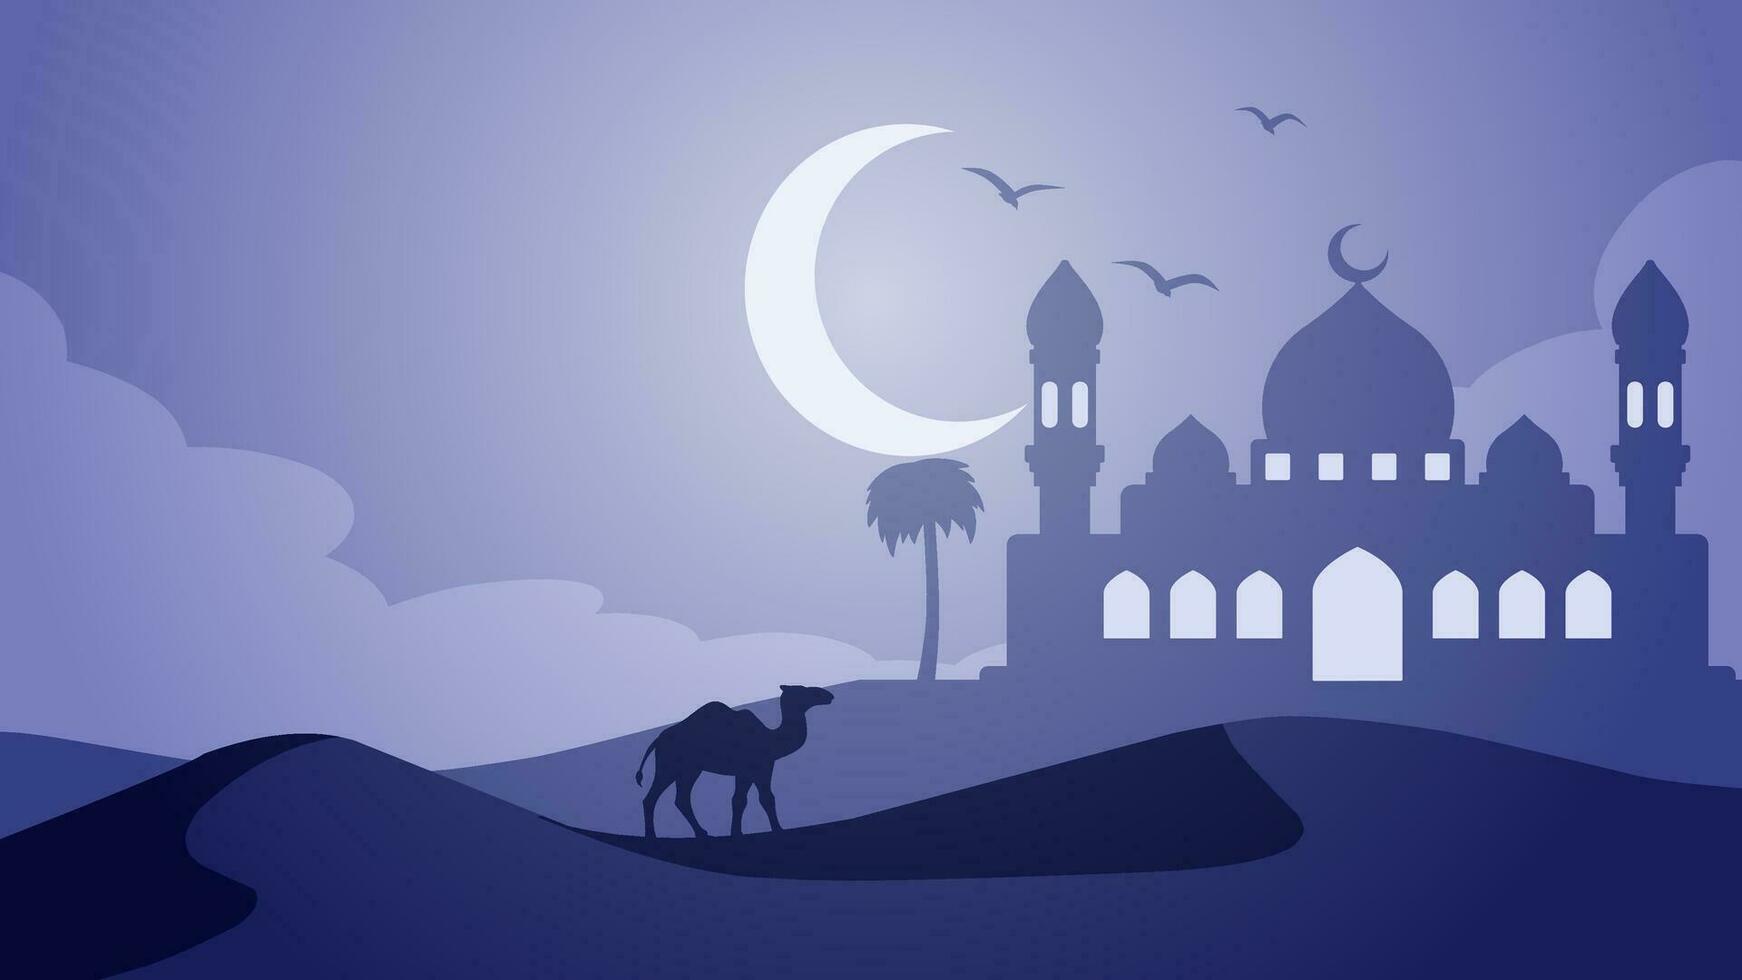 Ramadán paisaje silueta vector ilustración. Ramadán paisaje diseño gráfico en musulmán cultura y islam religión. islámico mezquita paisaje ilustración, antecedentes o fondo de pantalla